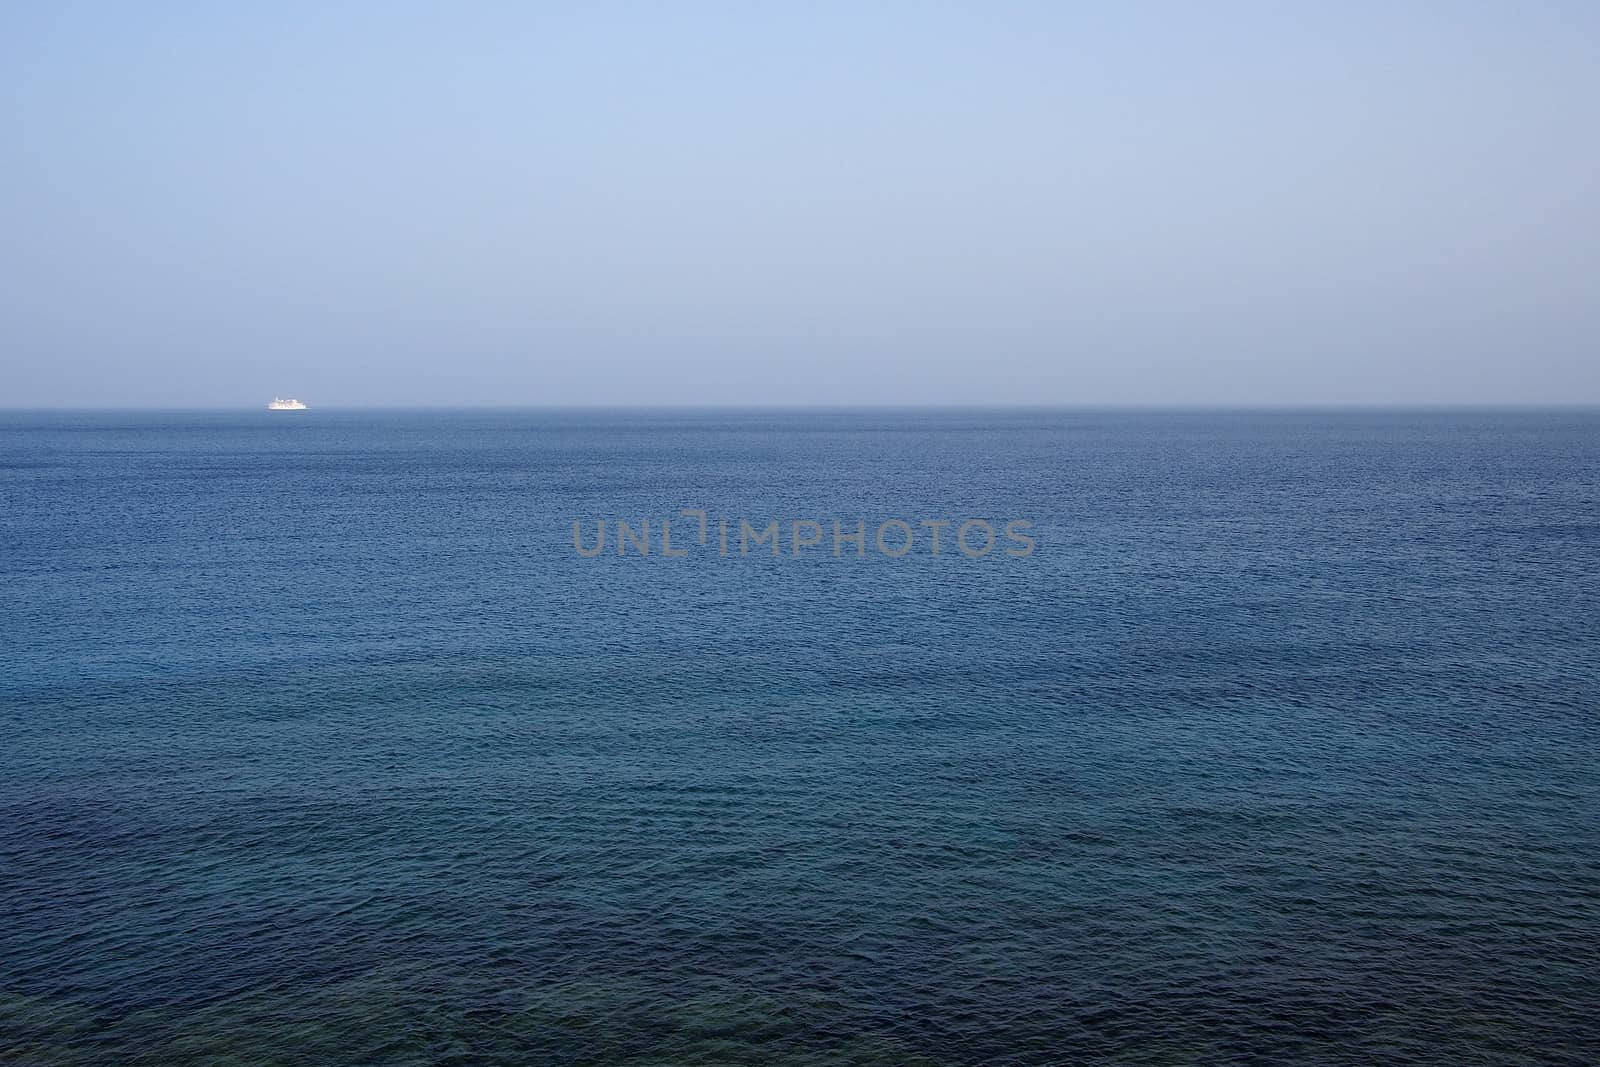 Ocean landscape under blue sky with sailboat